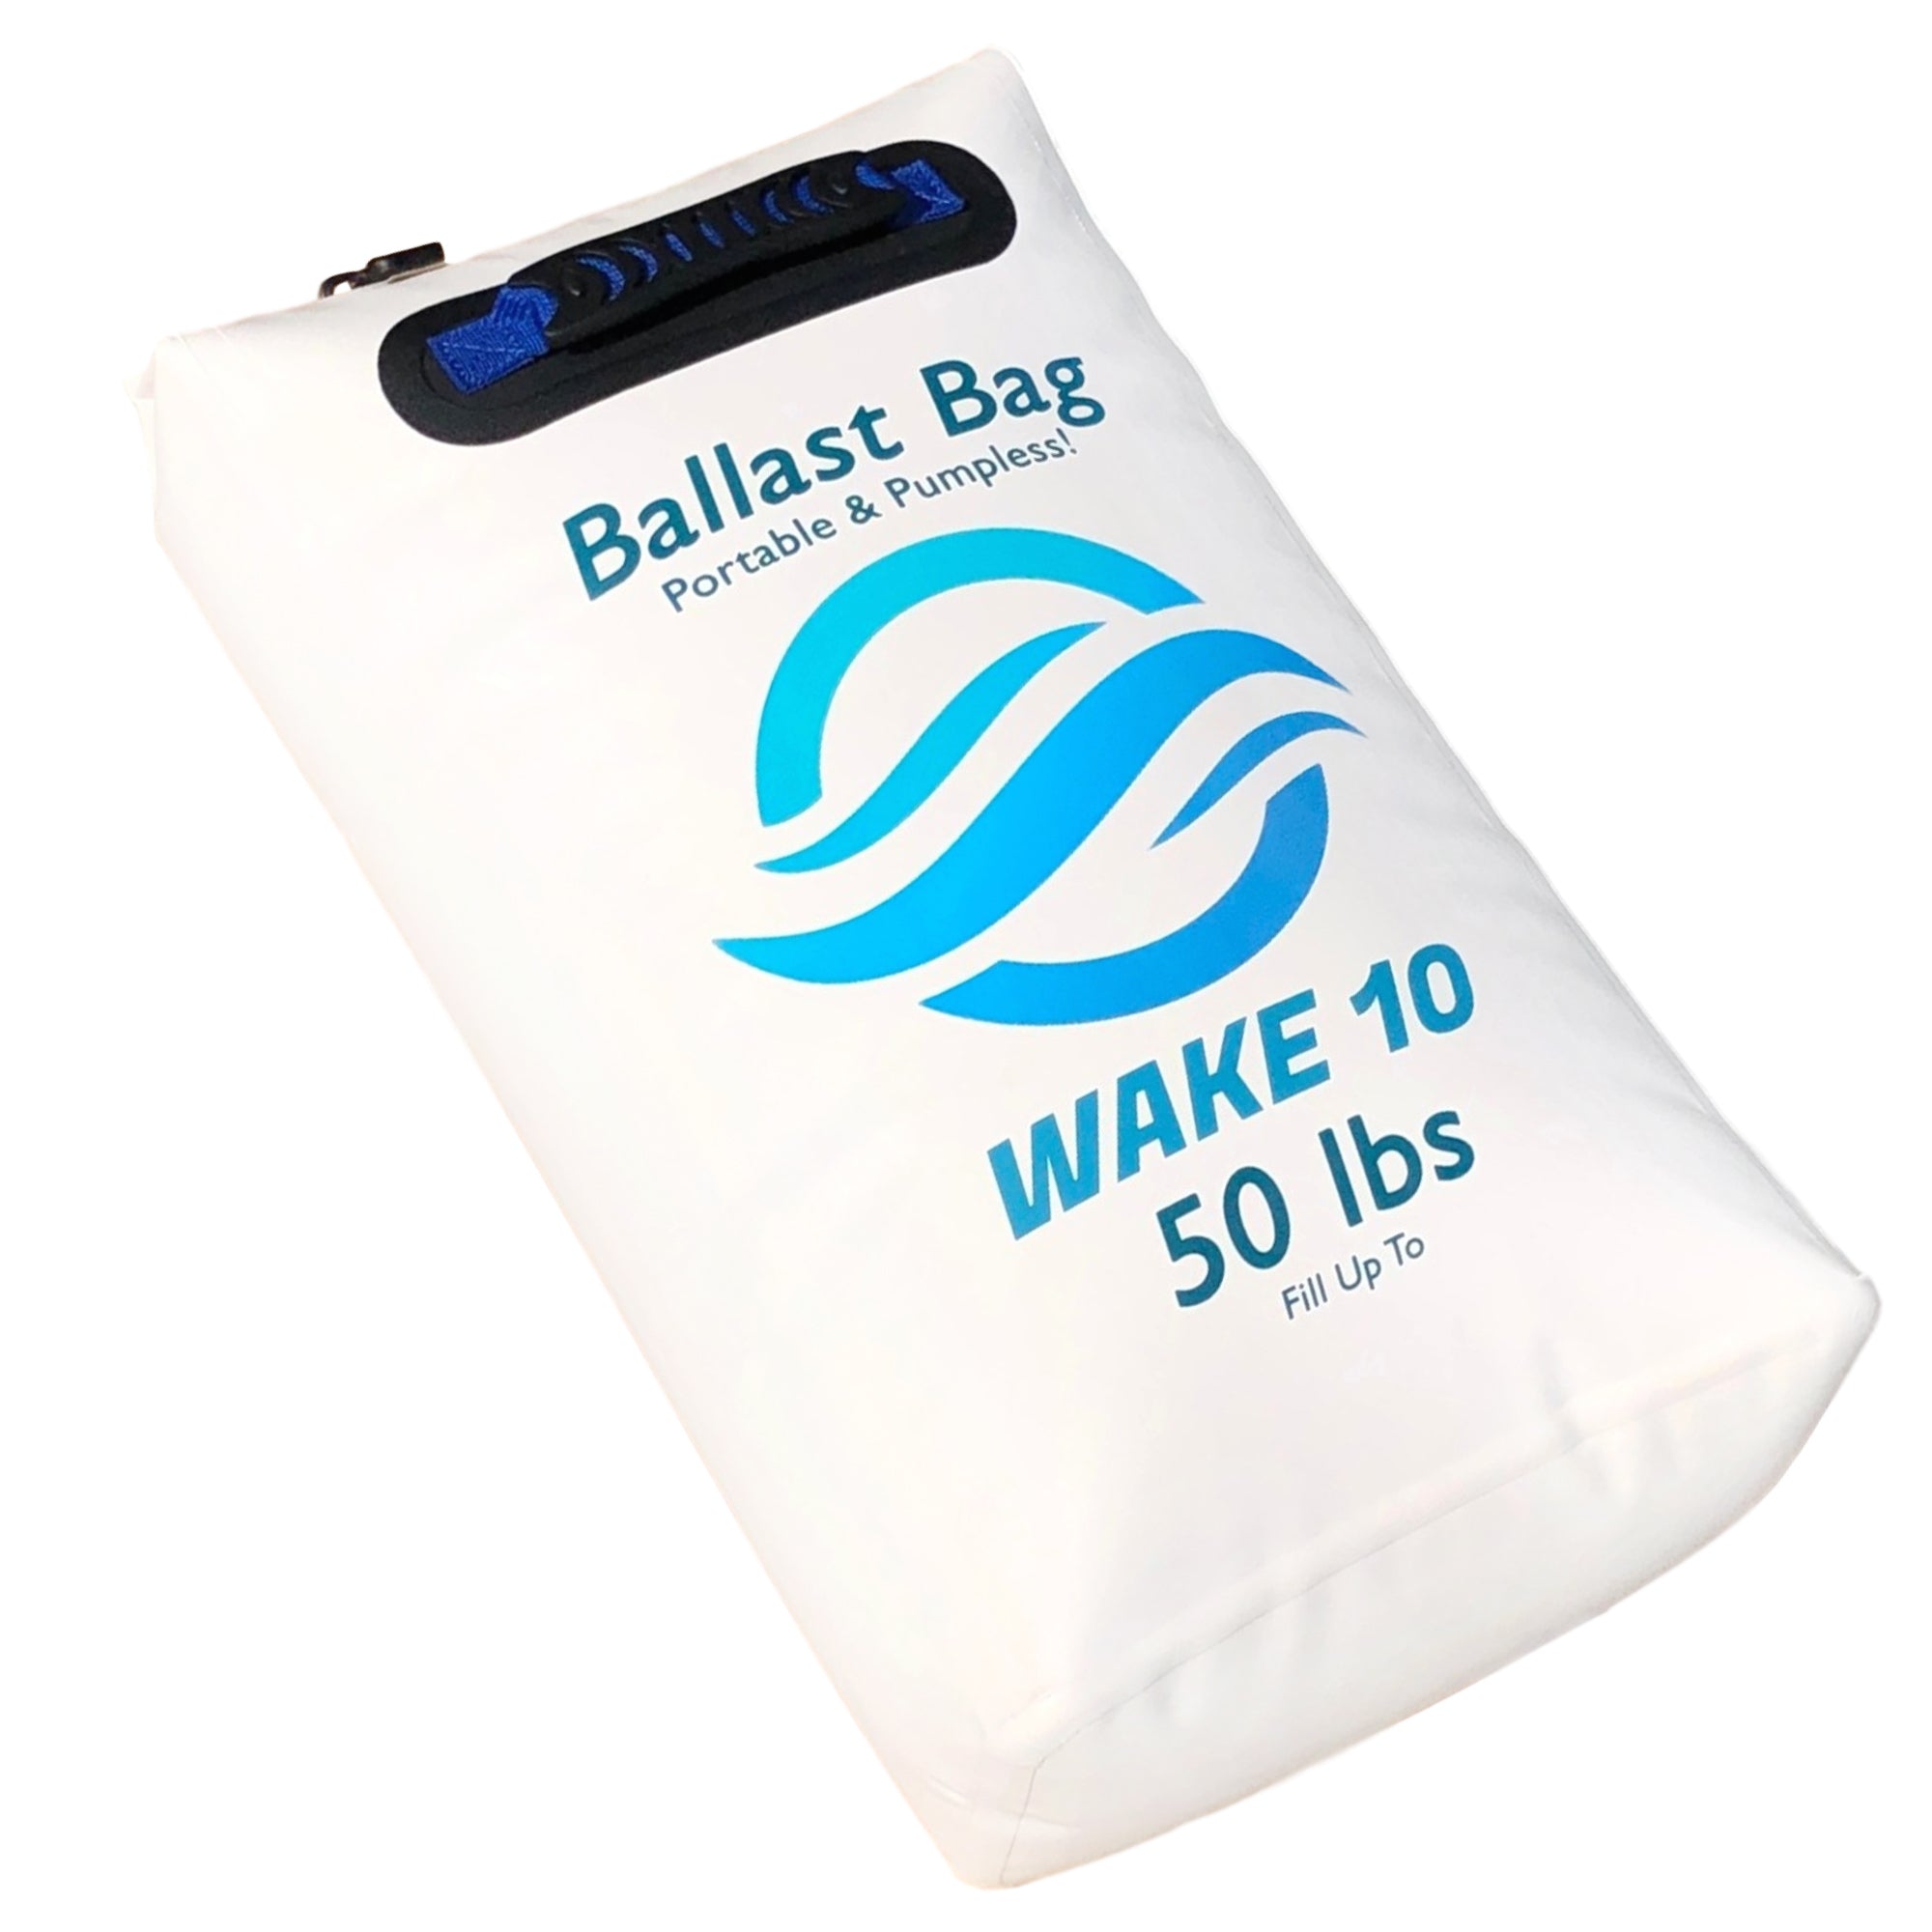 WAKE 10 Boat Ballast Bag